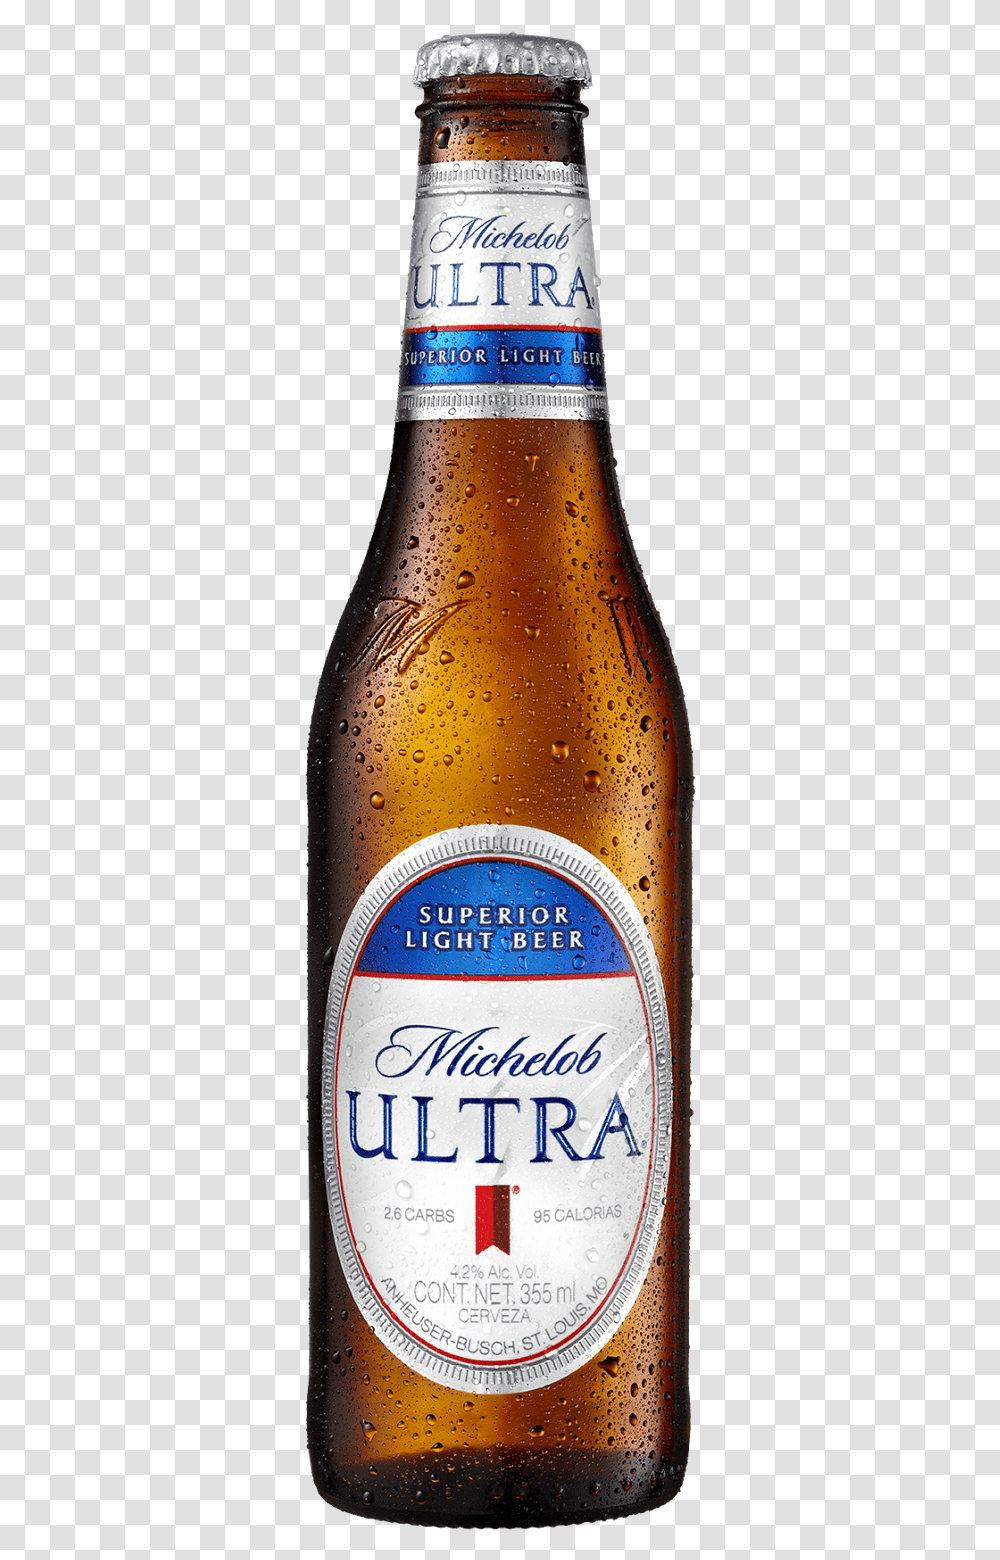 Con Slo 95 Caloras Y Michelob Ultra, Beer, Alcohol, Beverage, Drink Transparent Png